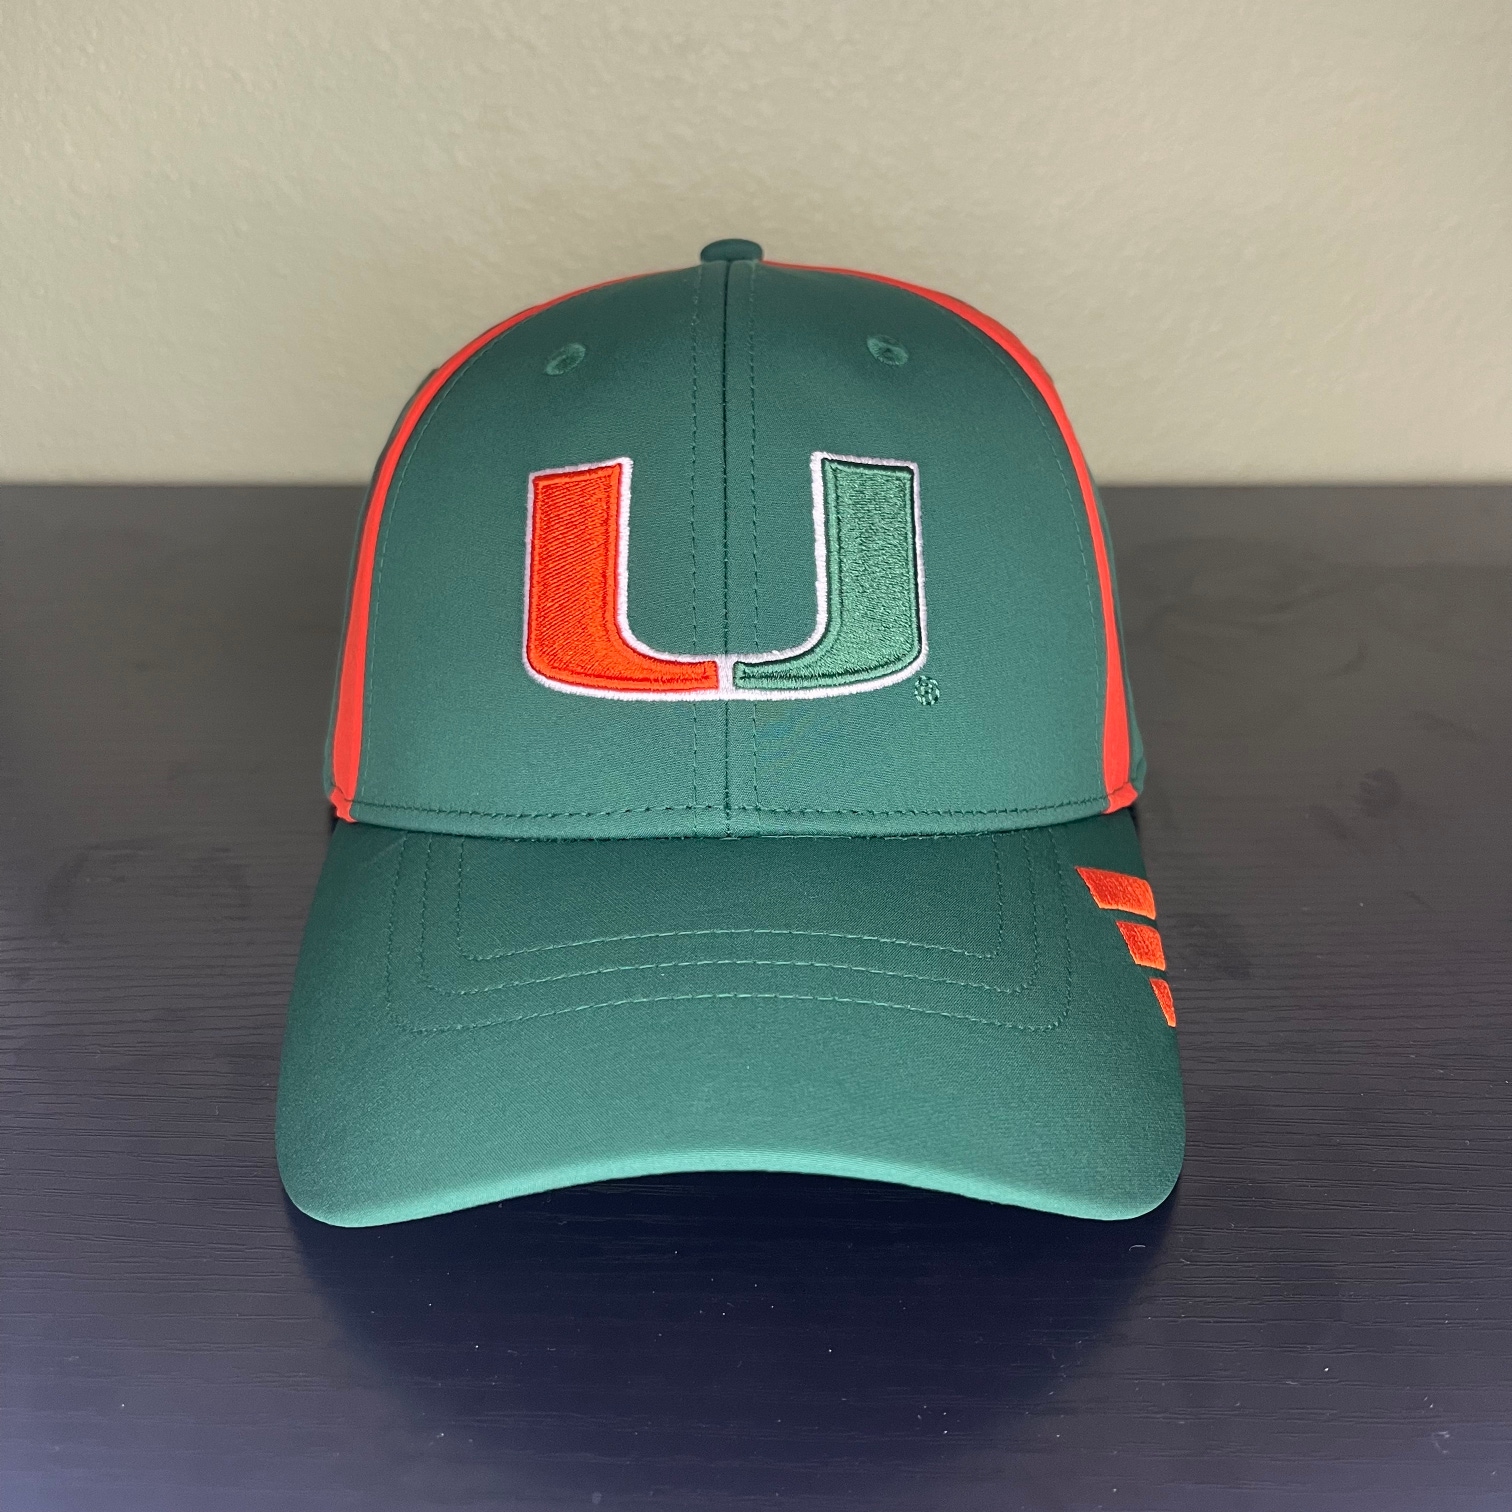 Miami Hurricanes Adidas Adjustable Strapback Hat Coaches Pack Green Orange